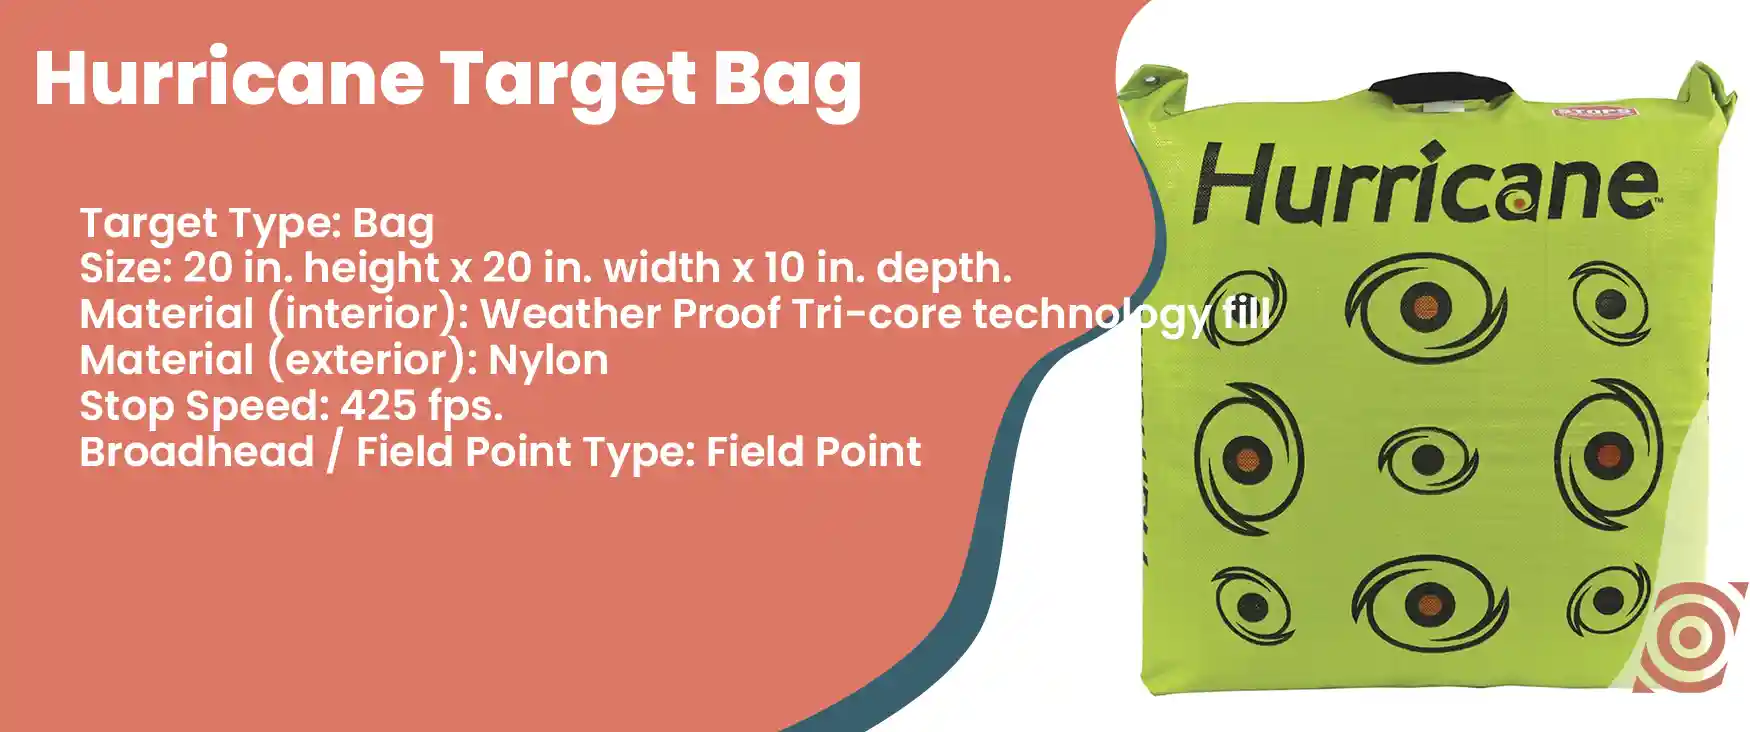 Hurricane-Target-Bag